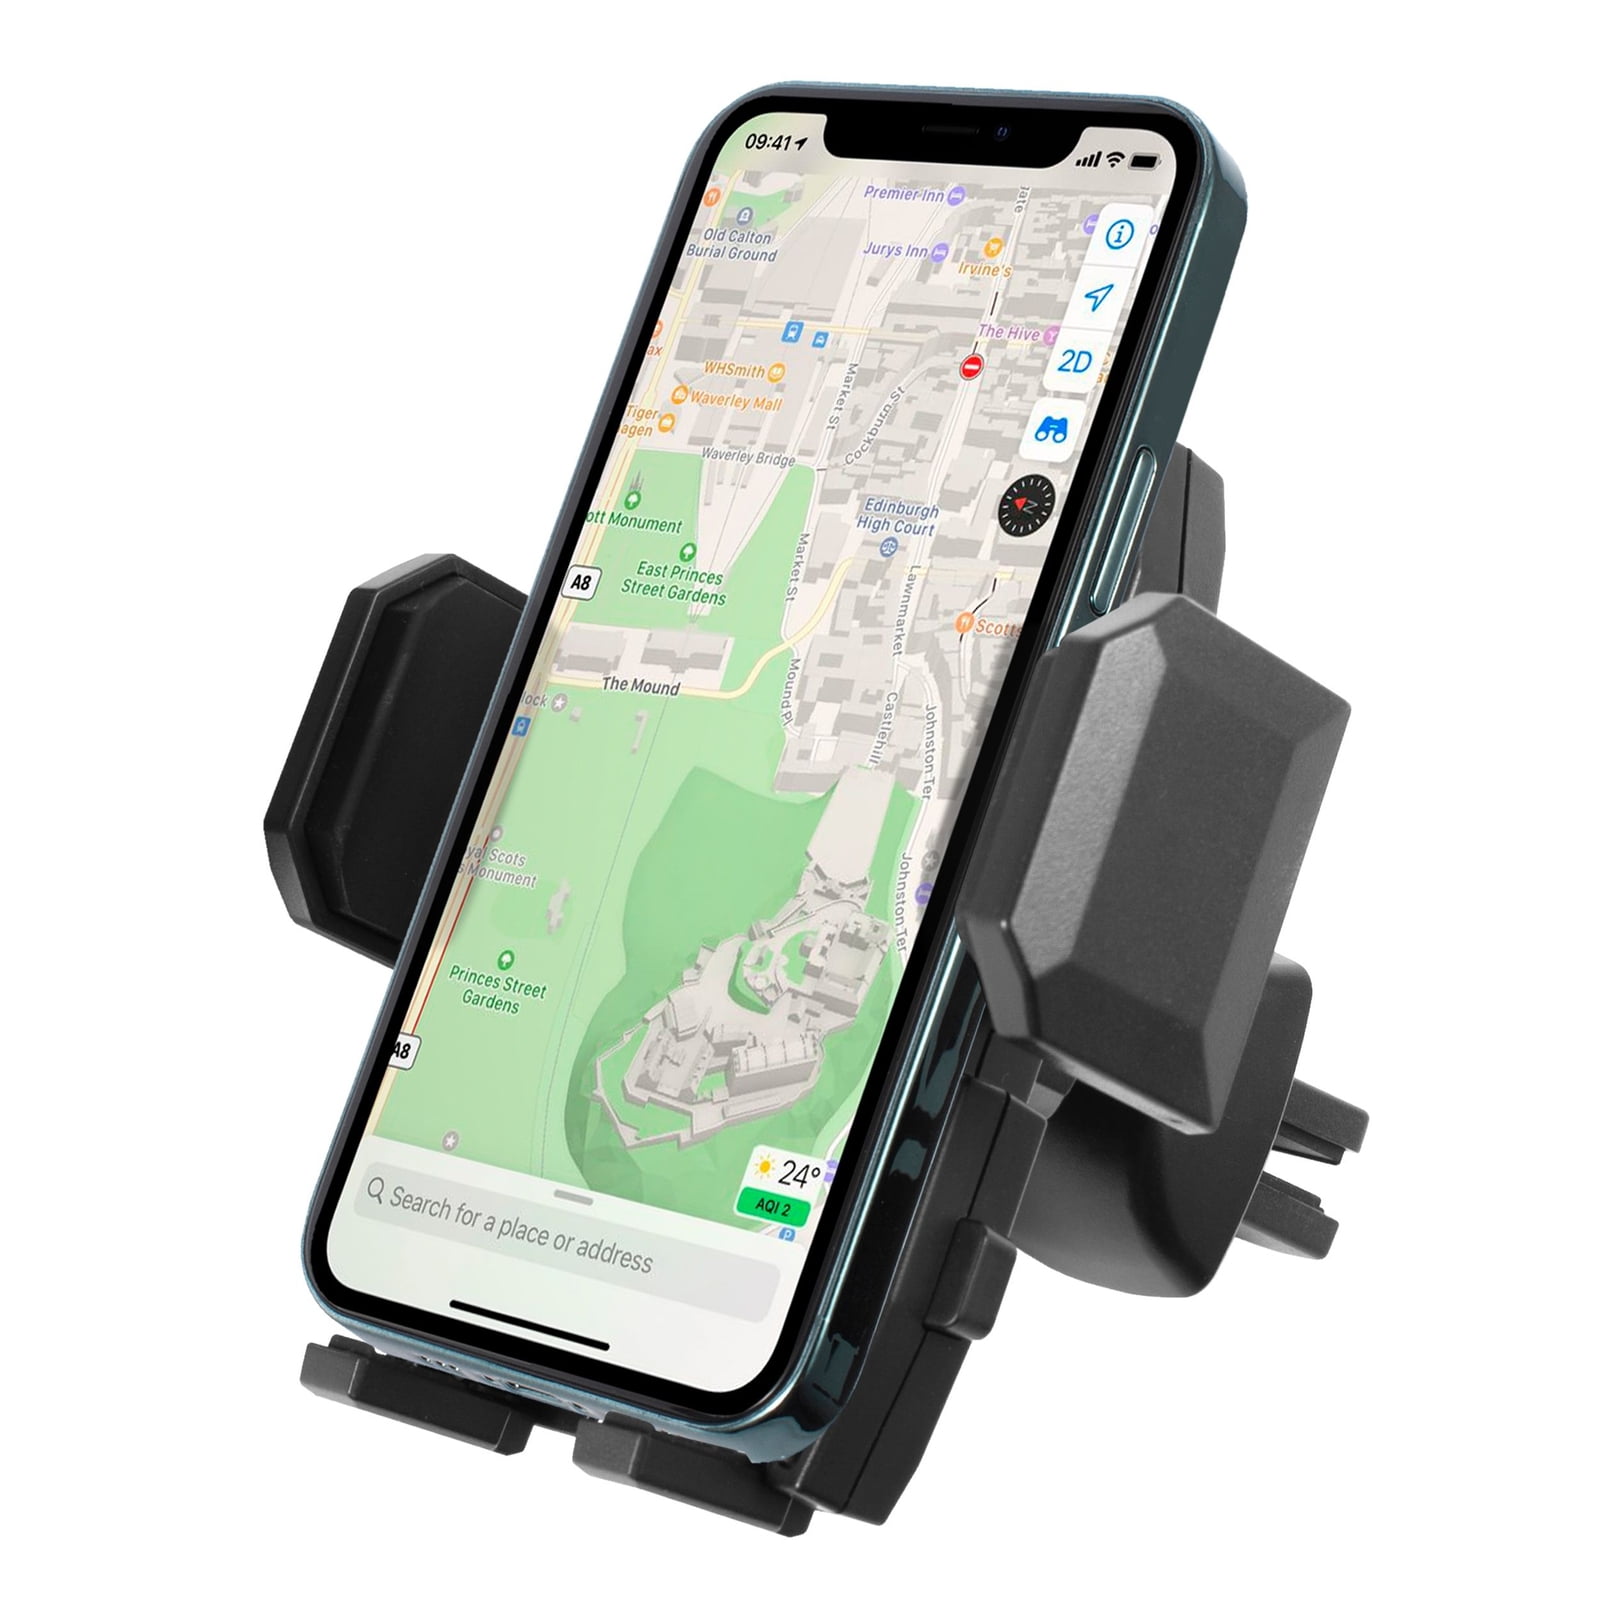 Insten Cell Phone Holder Universal Mount For Car Dashboard